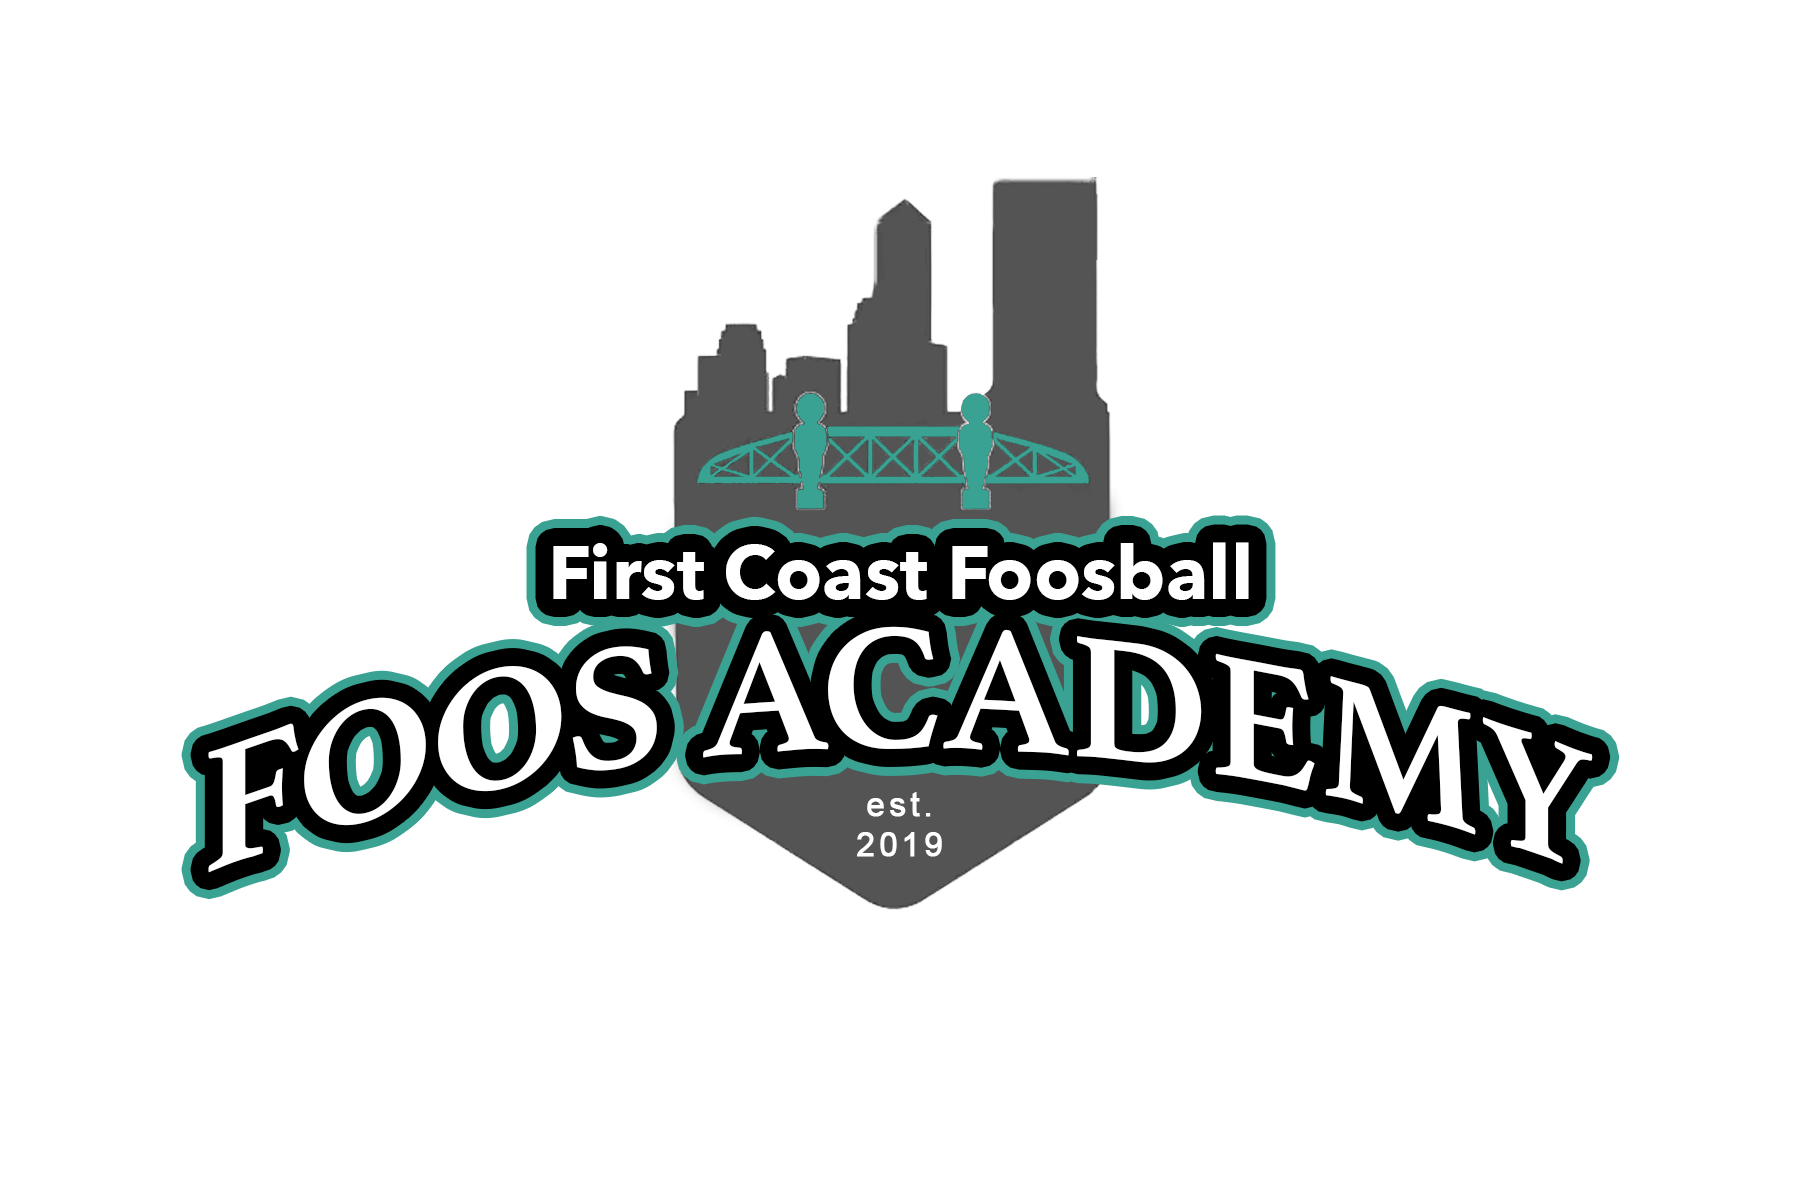 Foos Academy